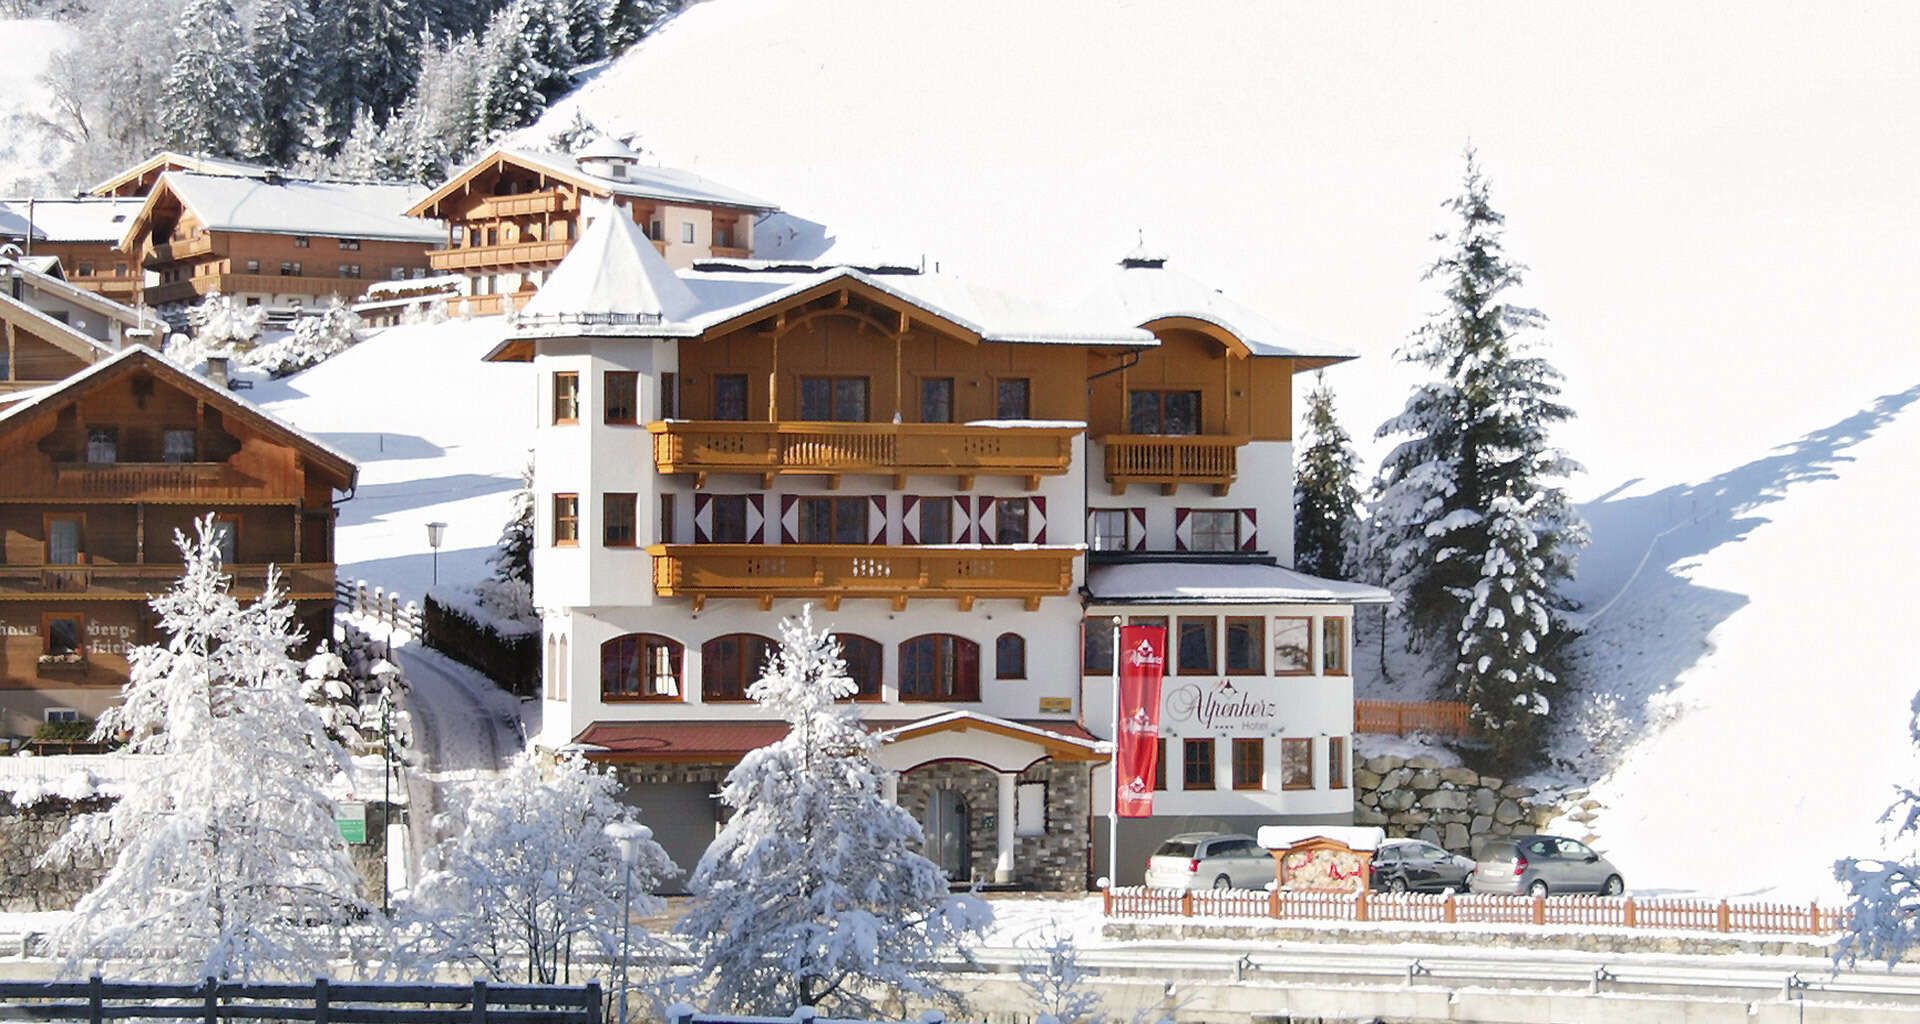 Alpenherz Hotel in Gerlos in the Zillertal in Tyrol